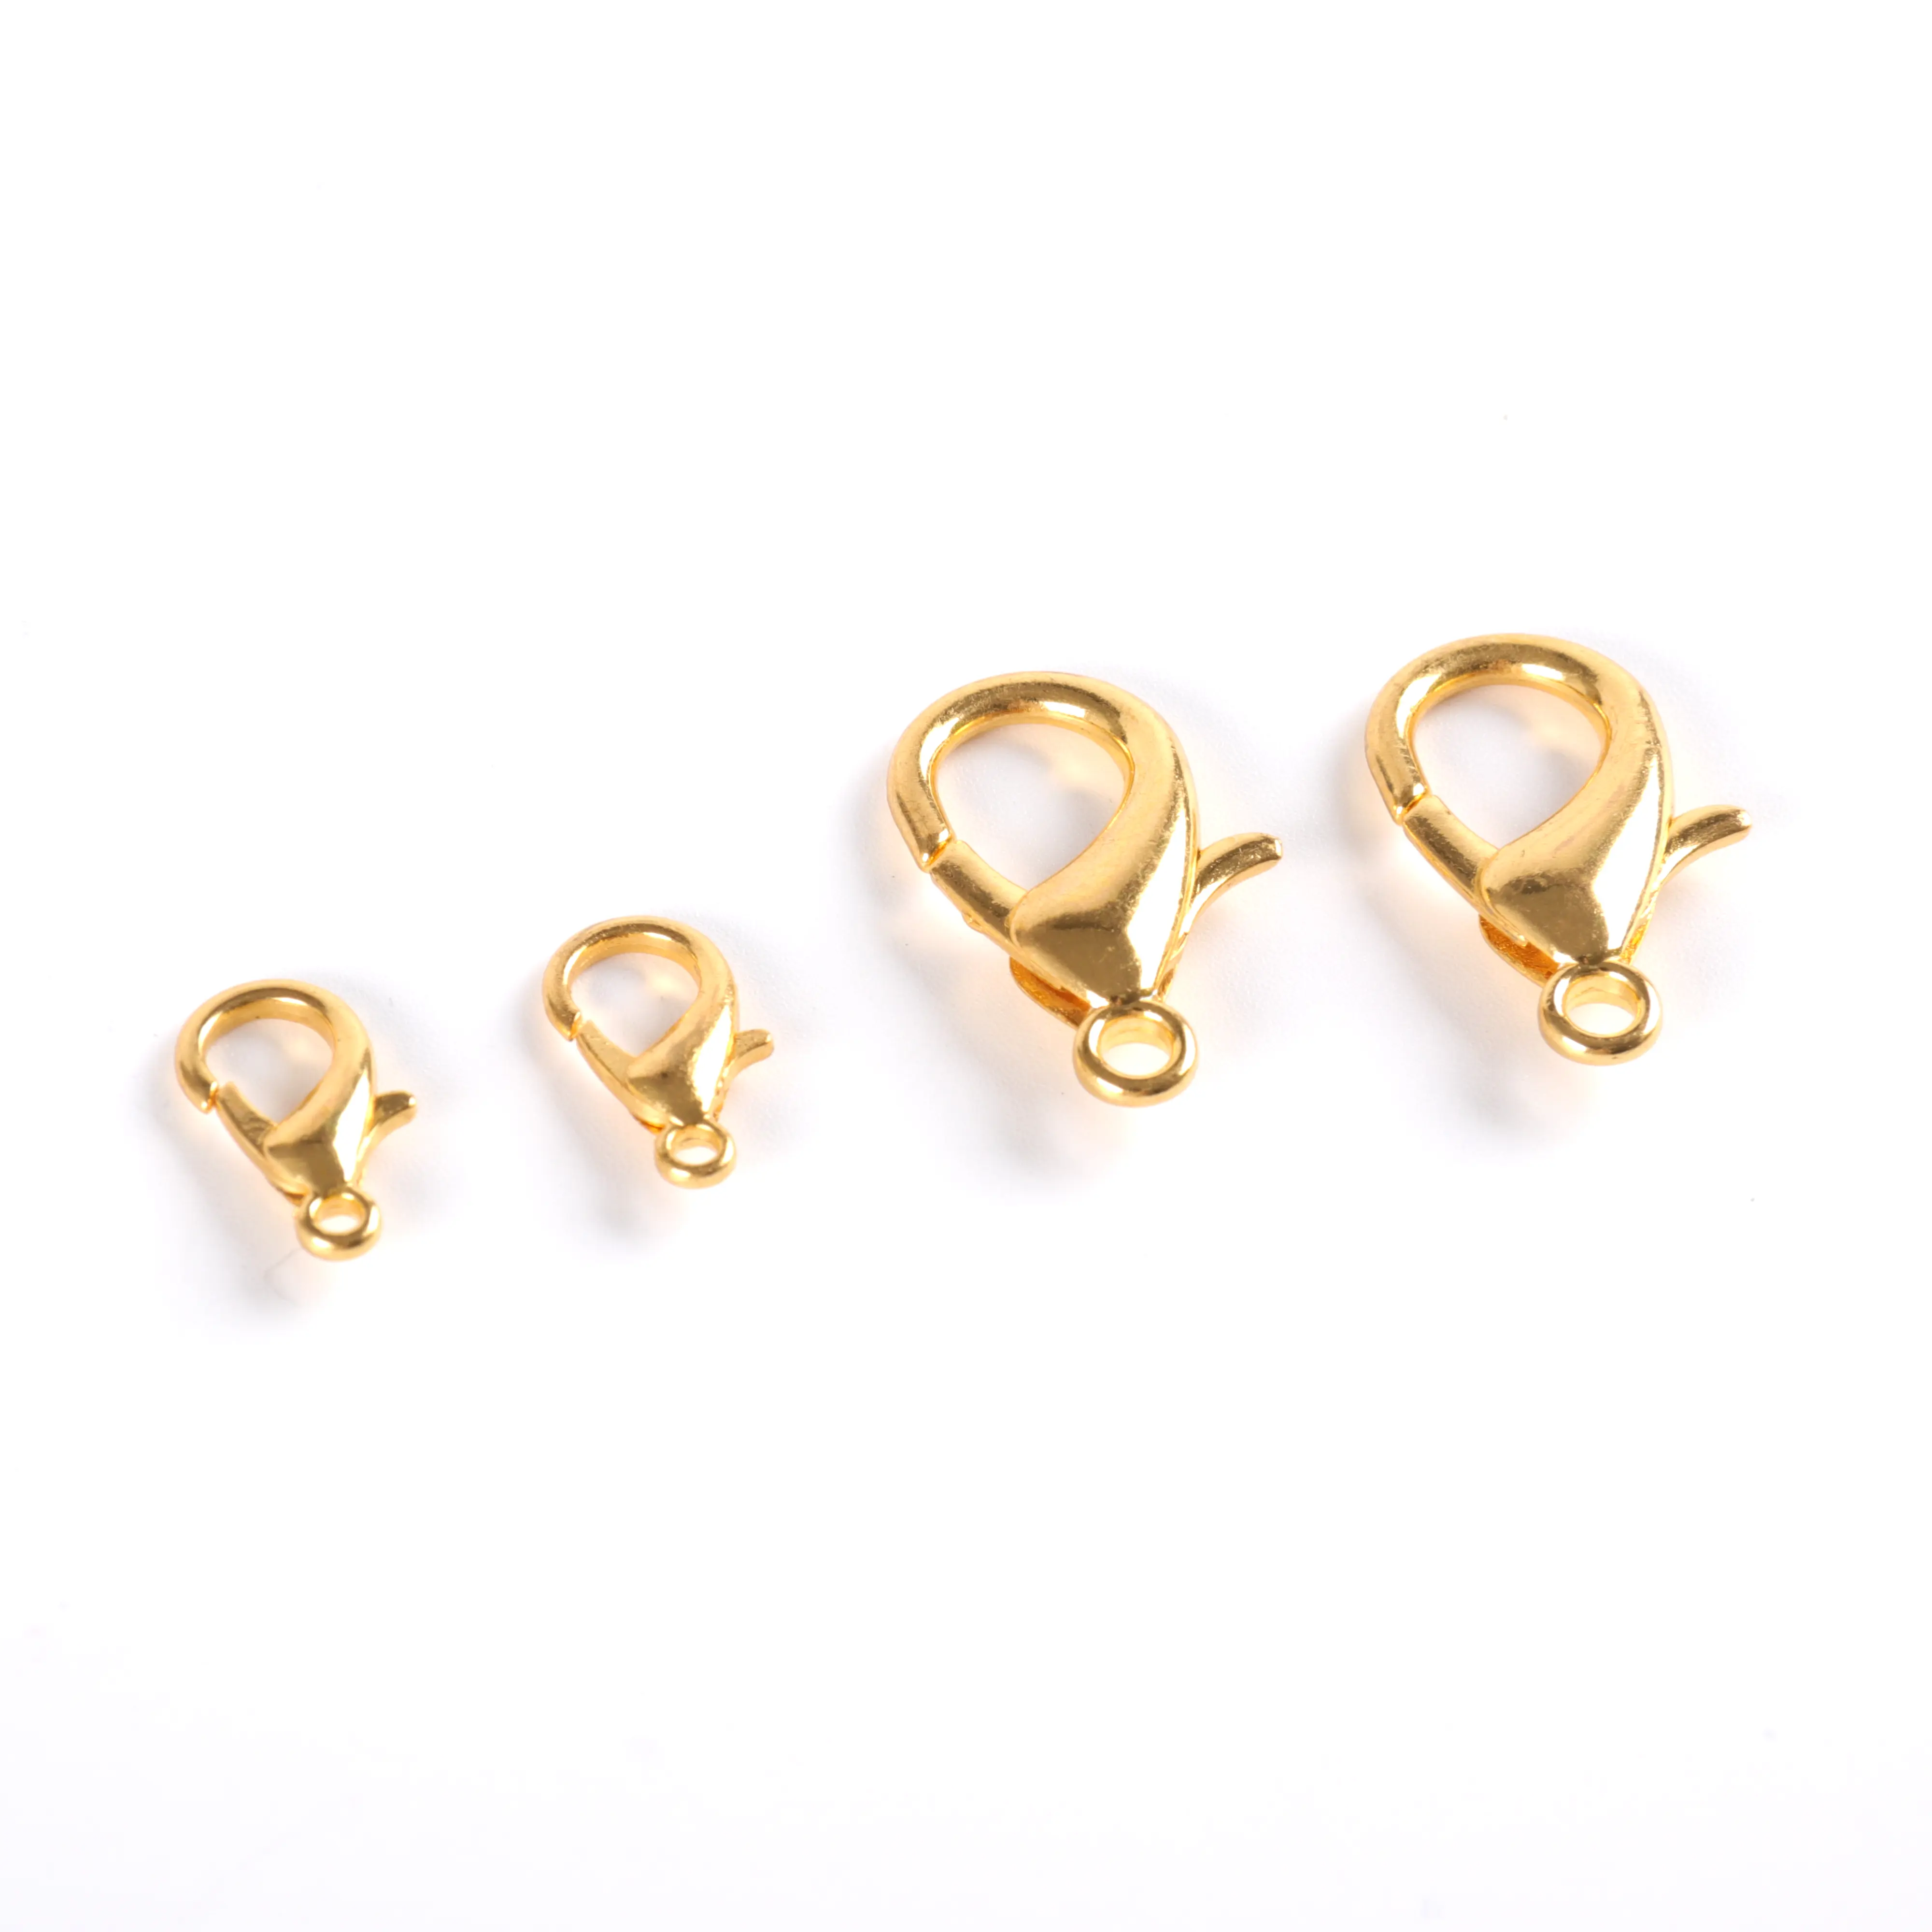 Manufactory חמה זהב כסף Keychain טבעת 30 mm מפתח טבעת ארוך 80 mm לובסטר אבזם מפתח וו שרשרת לצעצועים